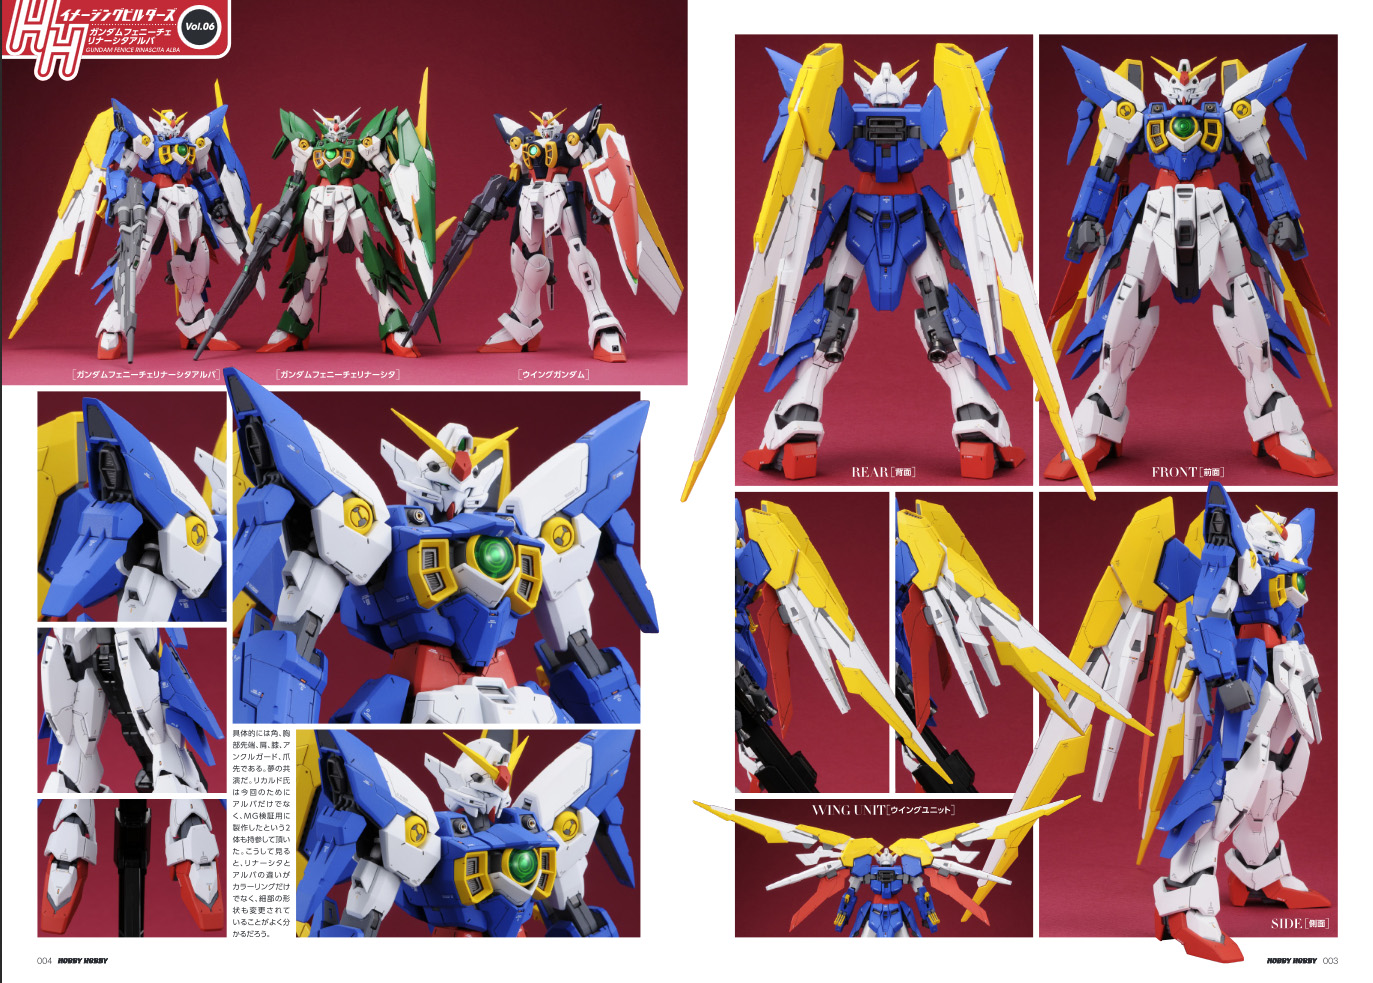 MG 1/100 Gundam Fenice Liner Sita Alba Gunpla Plastic Model